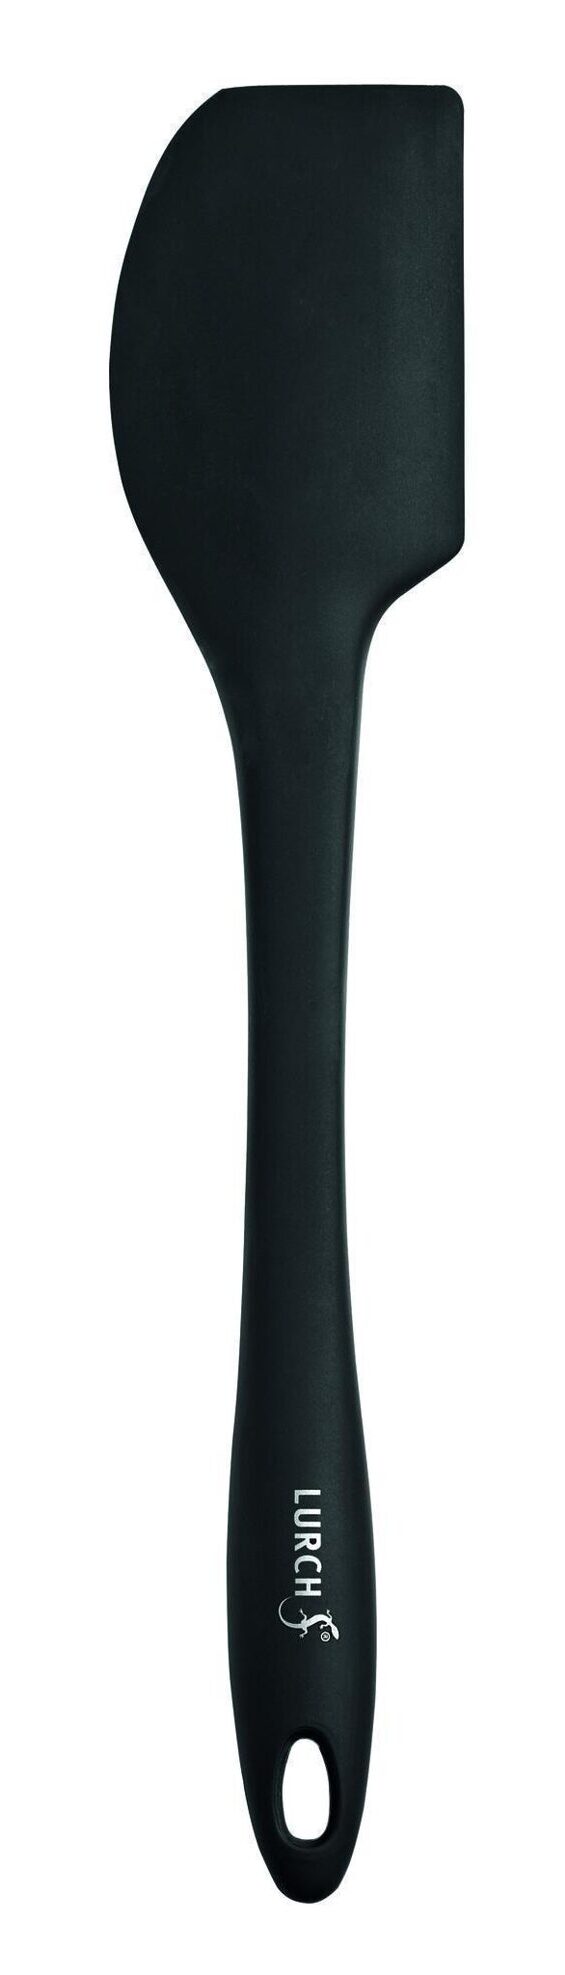 Black Tool Teigschaber 31 cm